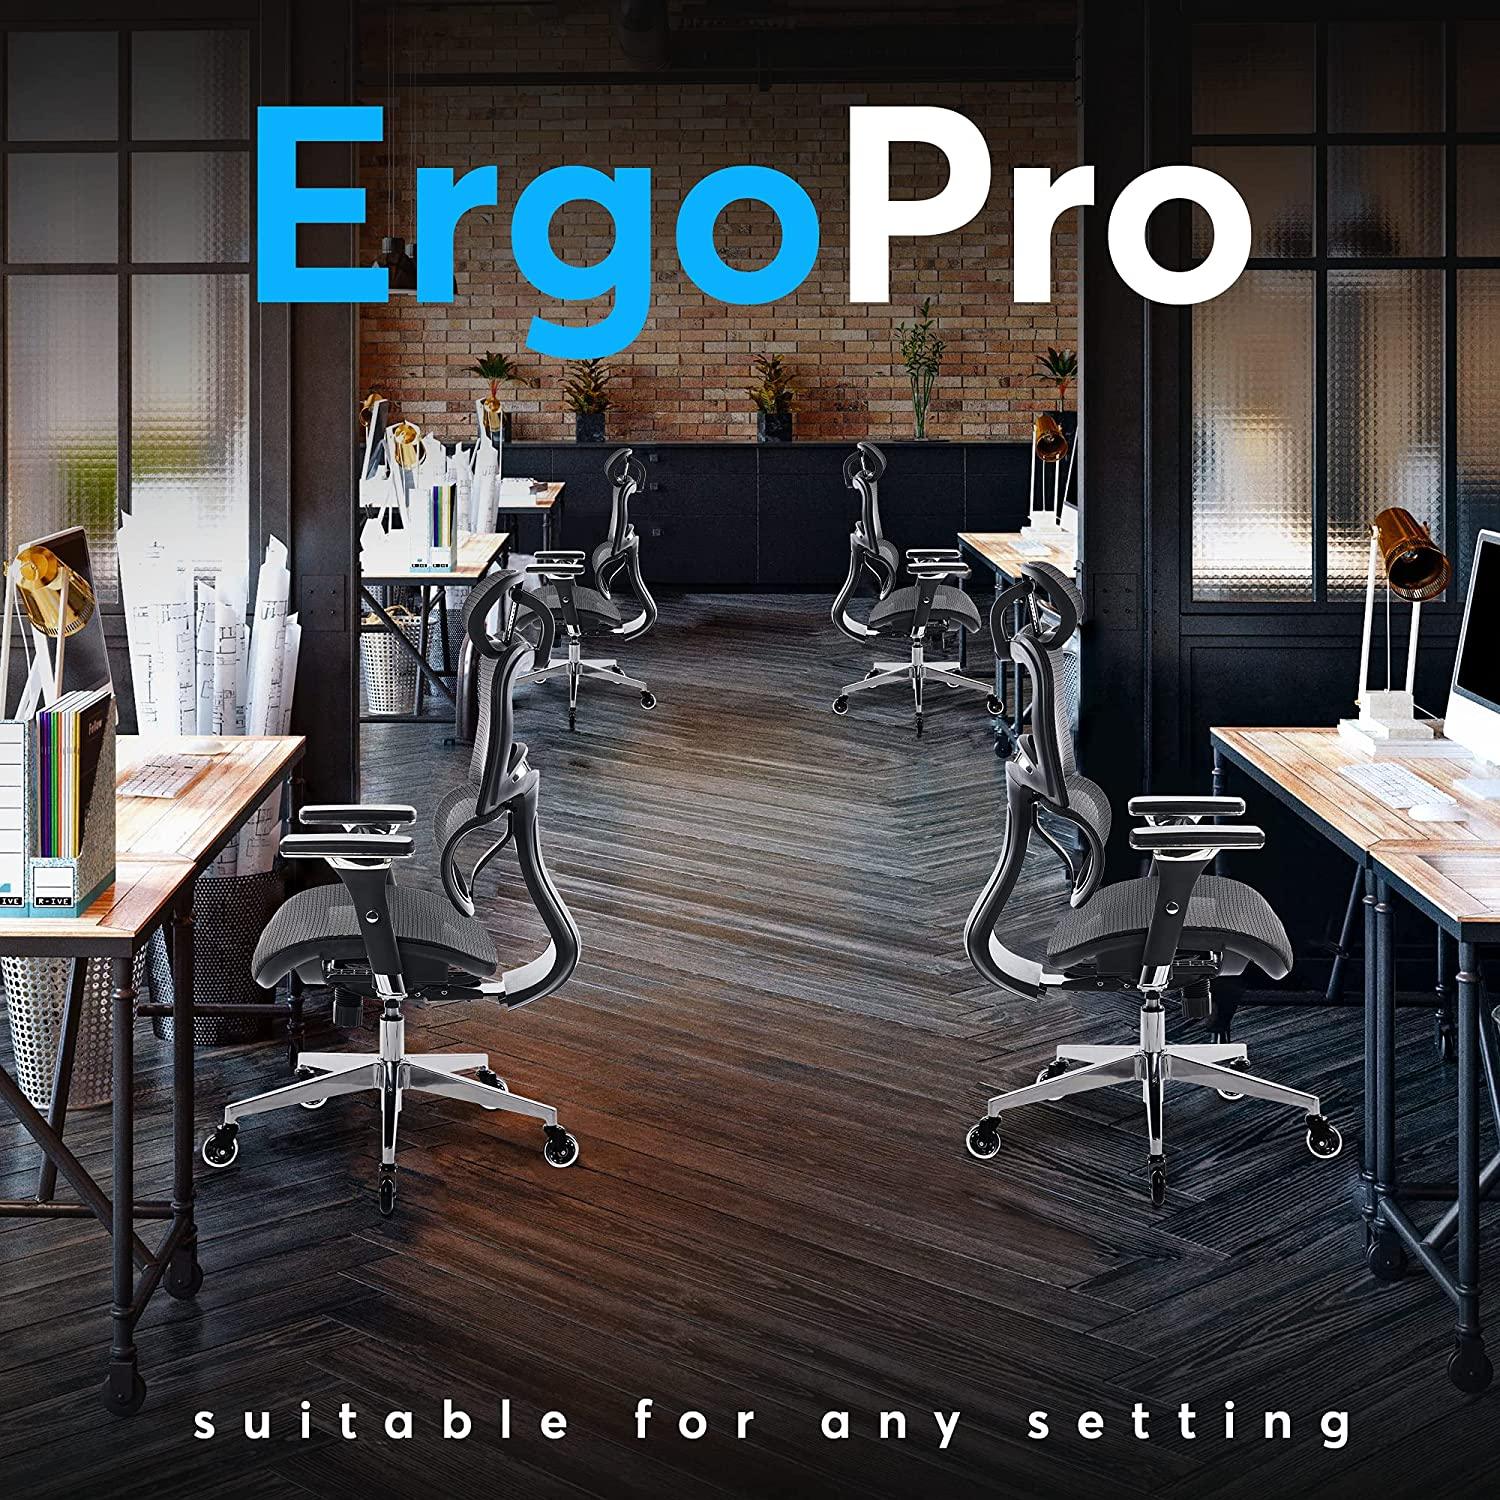 ErgoPro Ergonomic Office Chair